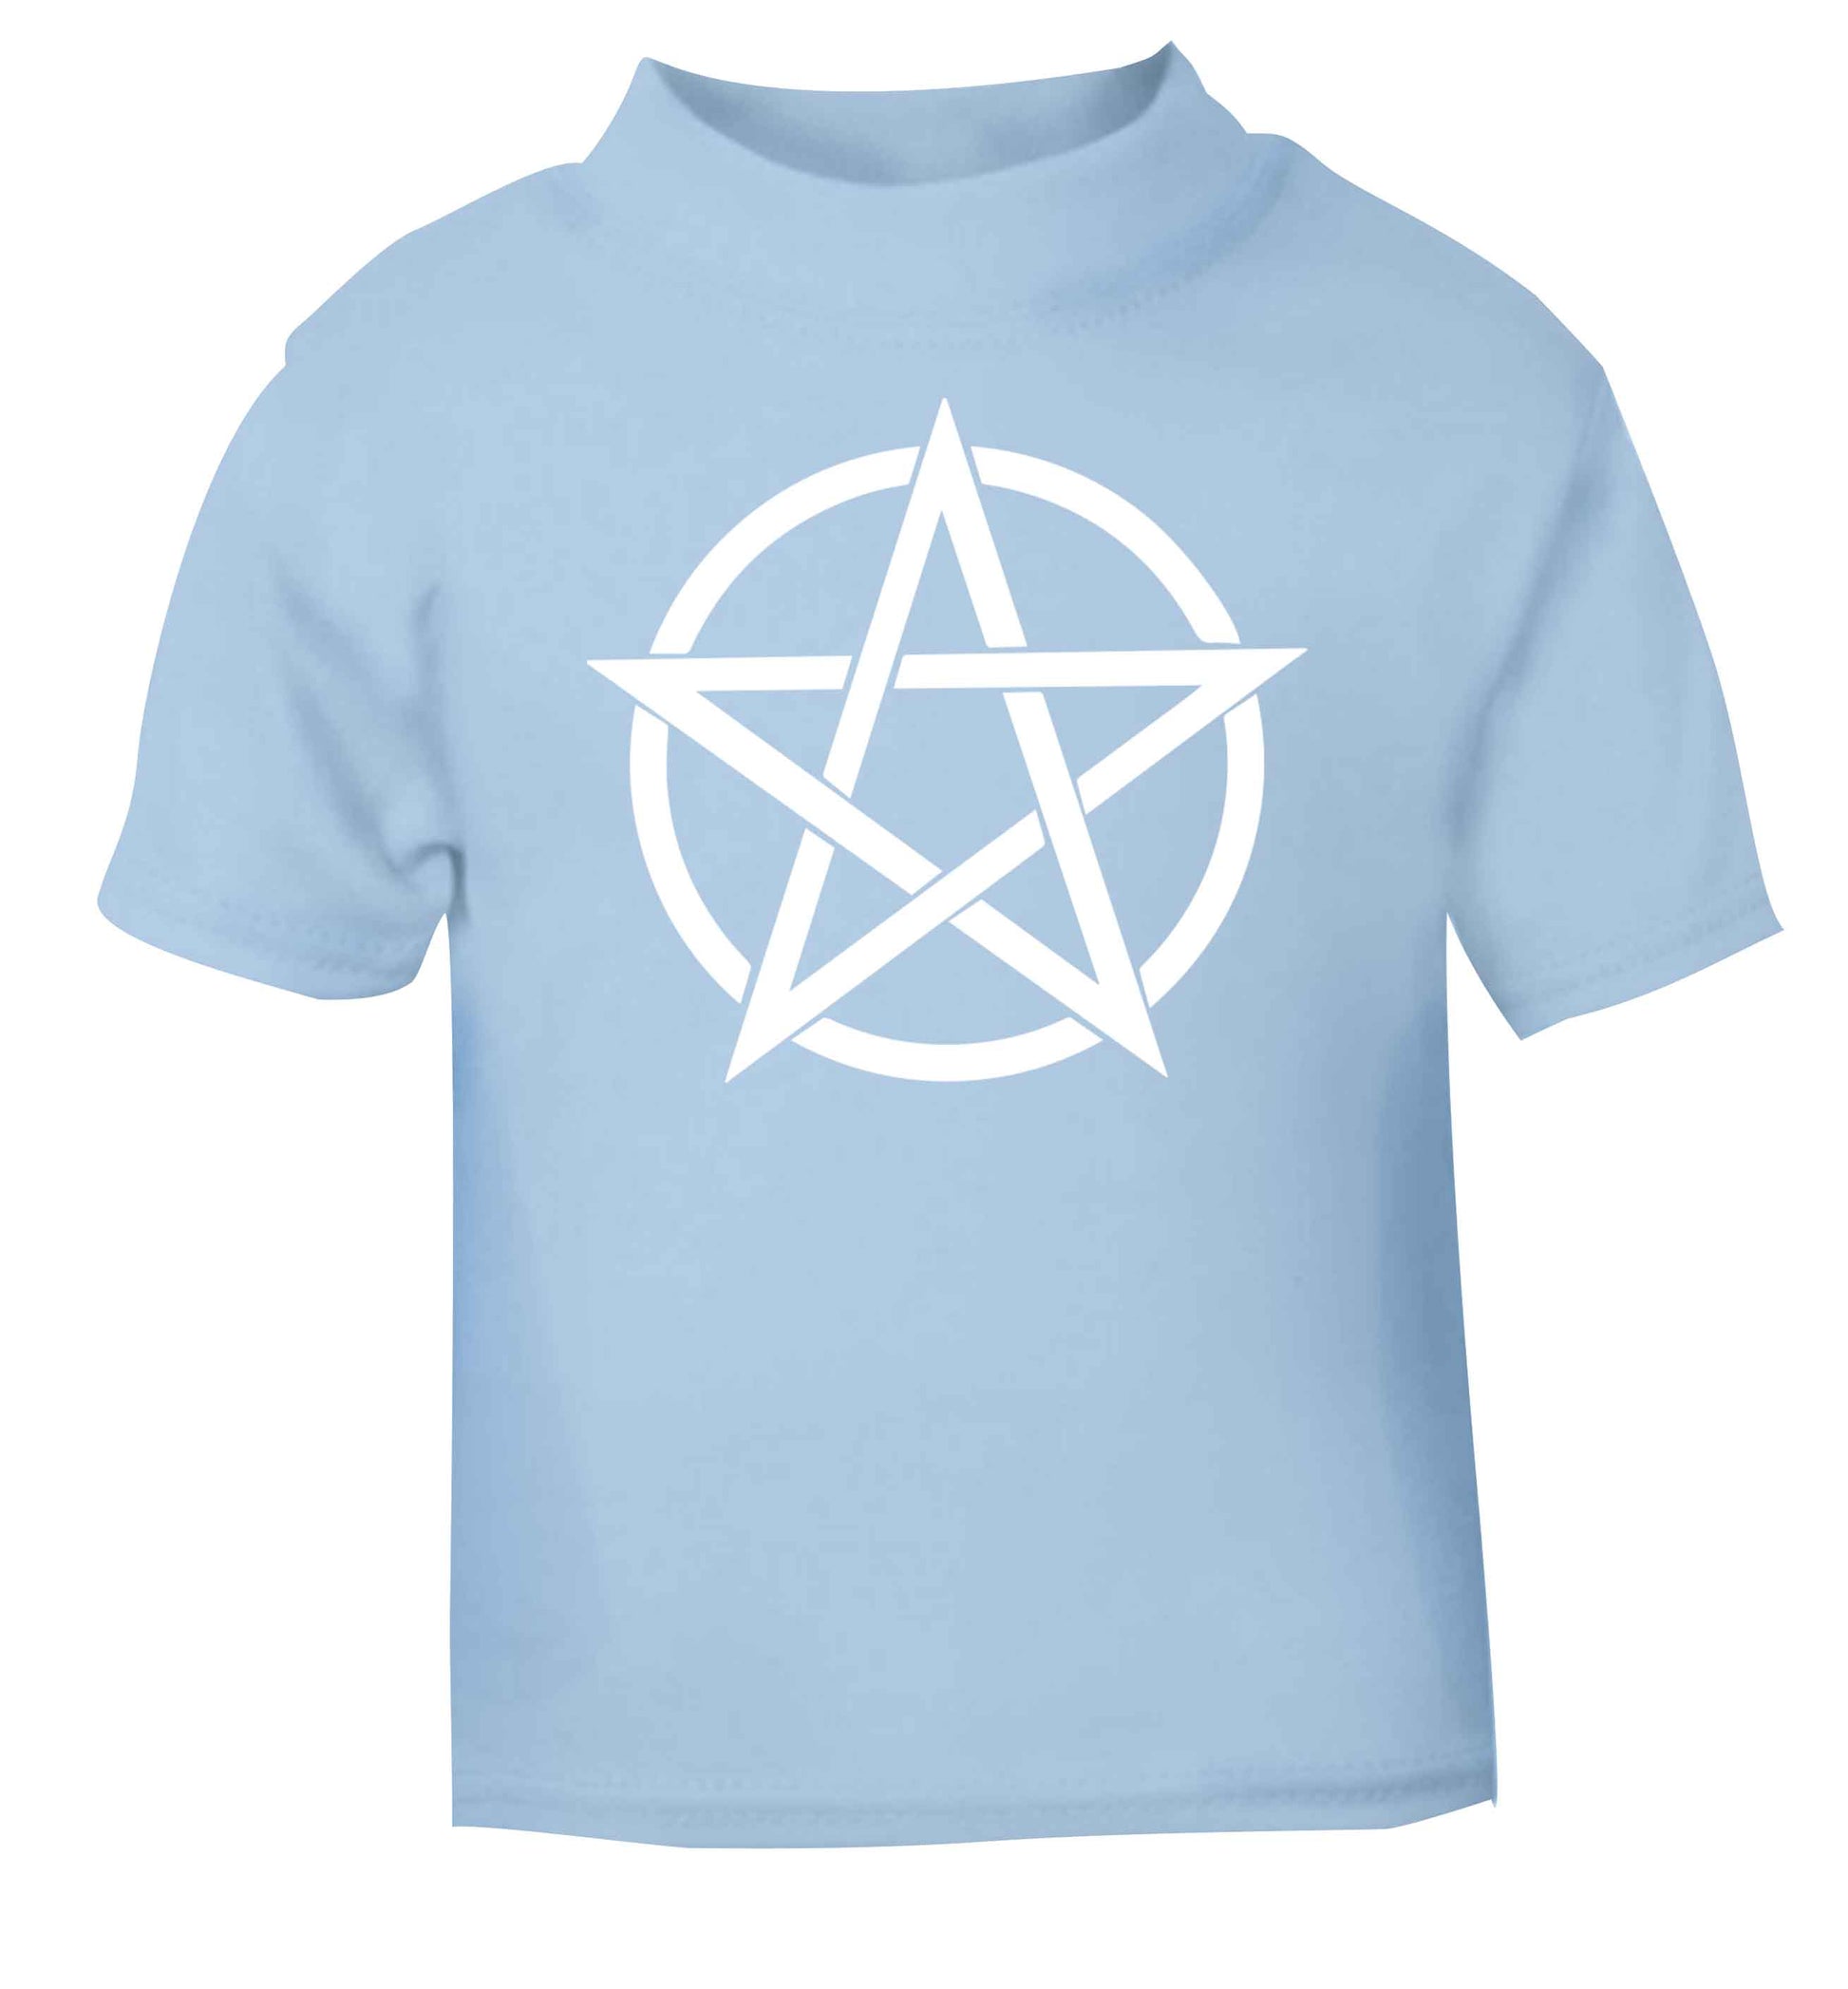 Pentagram symbol light blue baby toddler Tshirt 2 Years